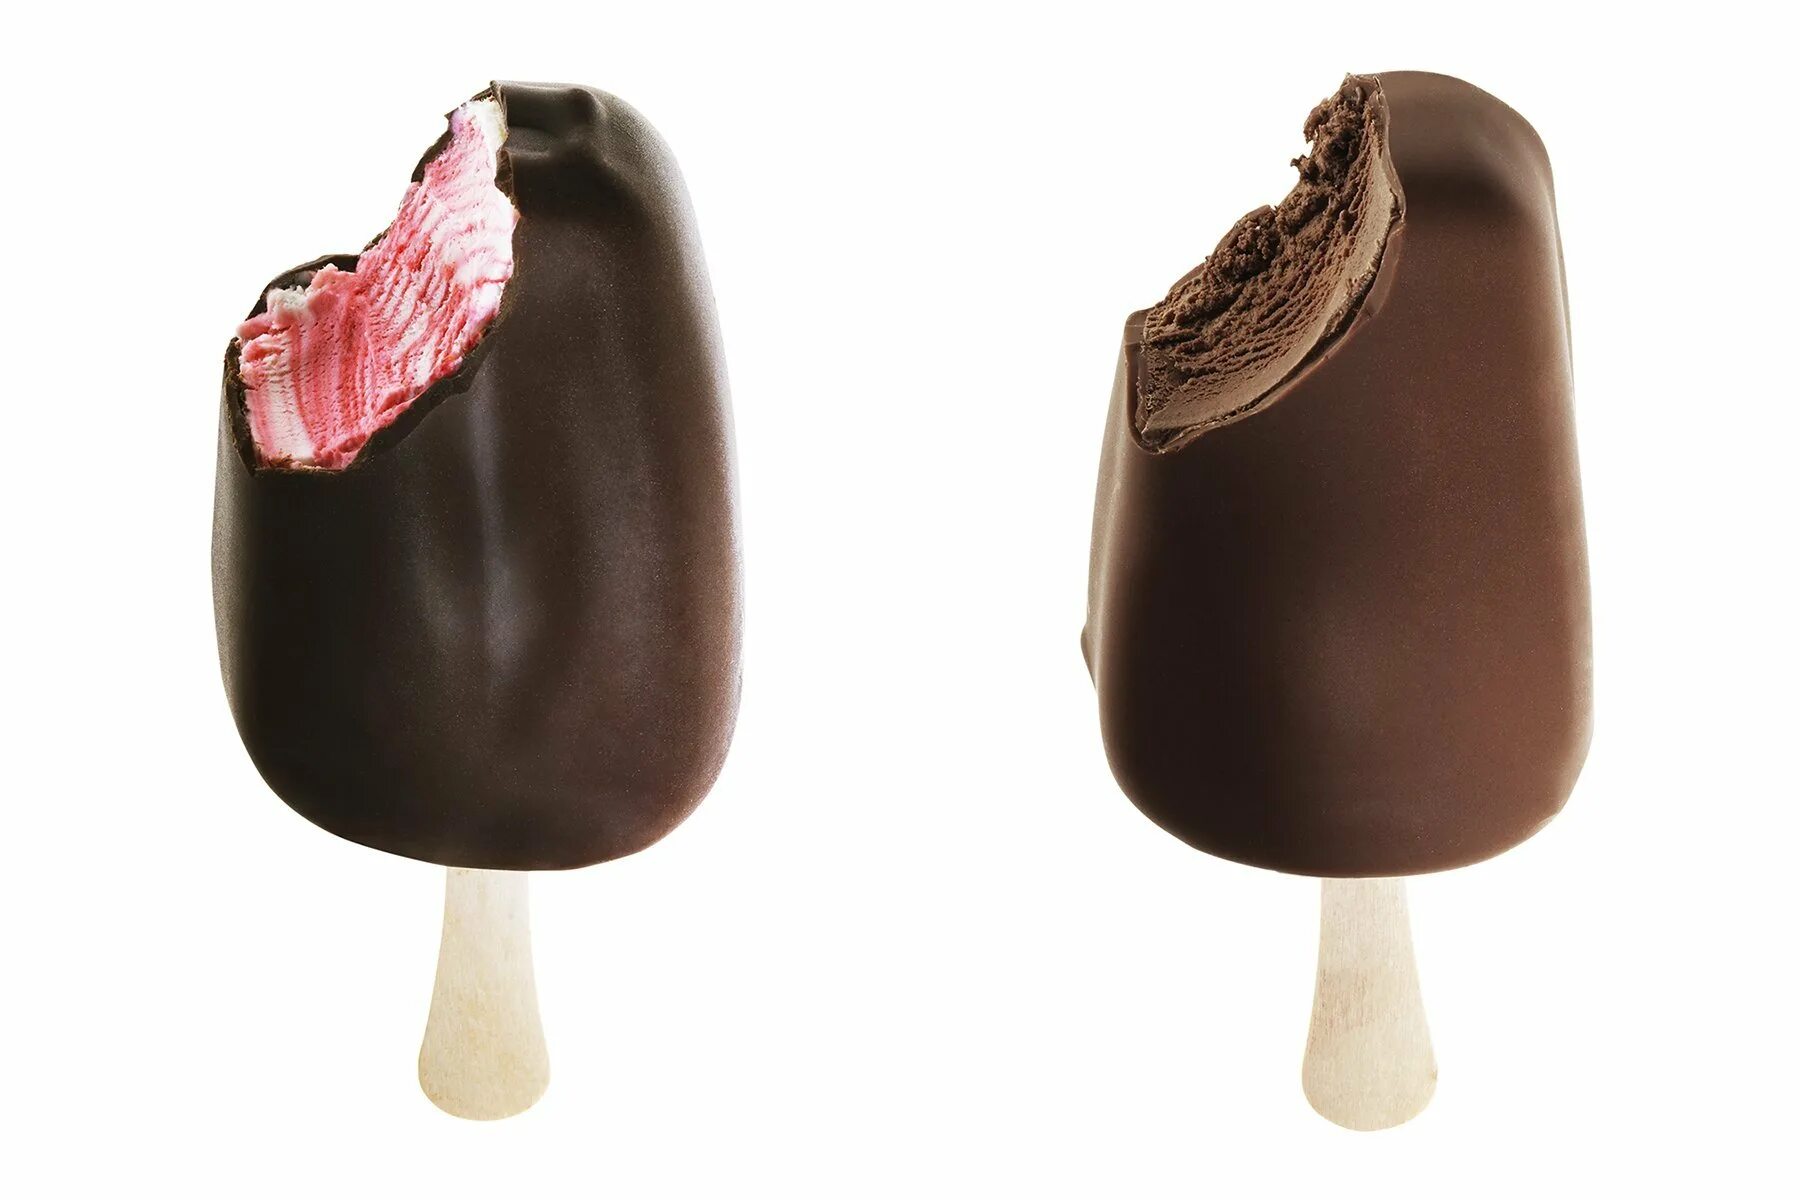 Мороженое эскимо шоколадное на палочке. Эскимо на палочке шоколадное с пломбиром. Кристиан Нельсон эскимо. Шоколадное мороженое эскимо.